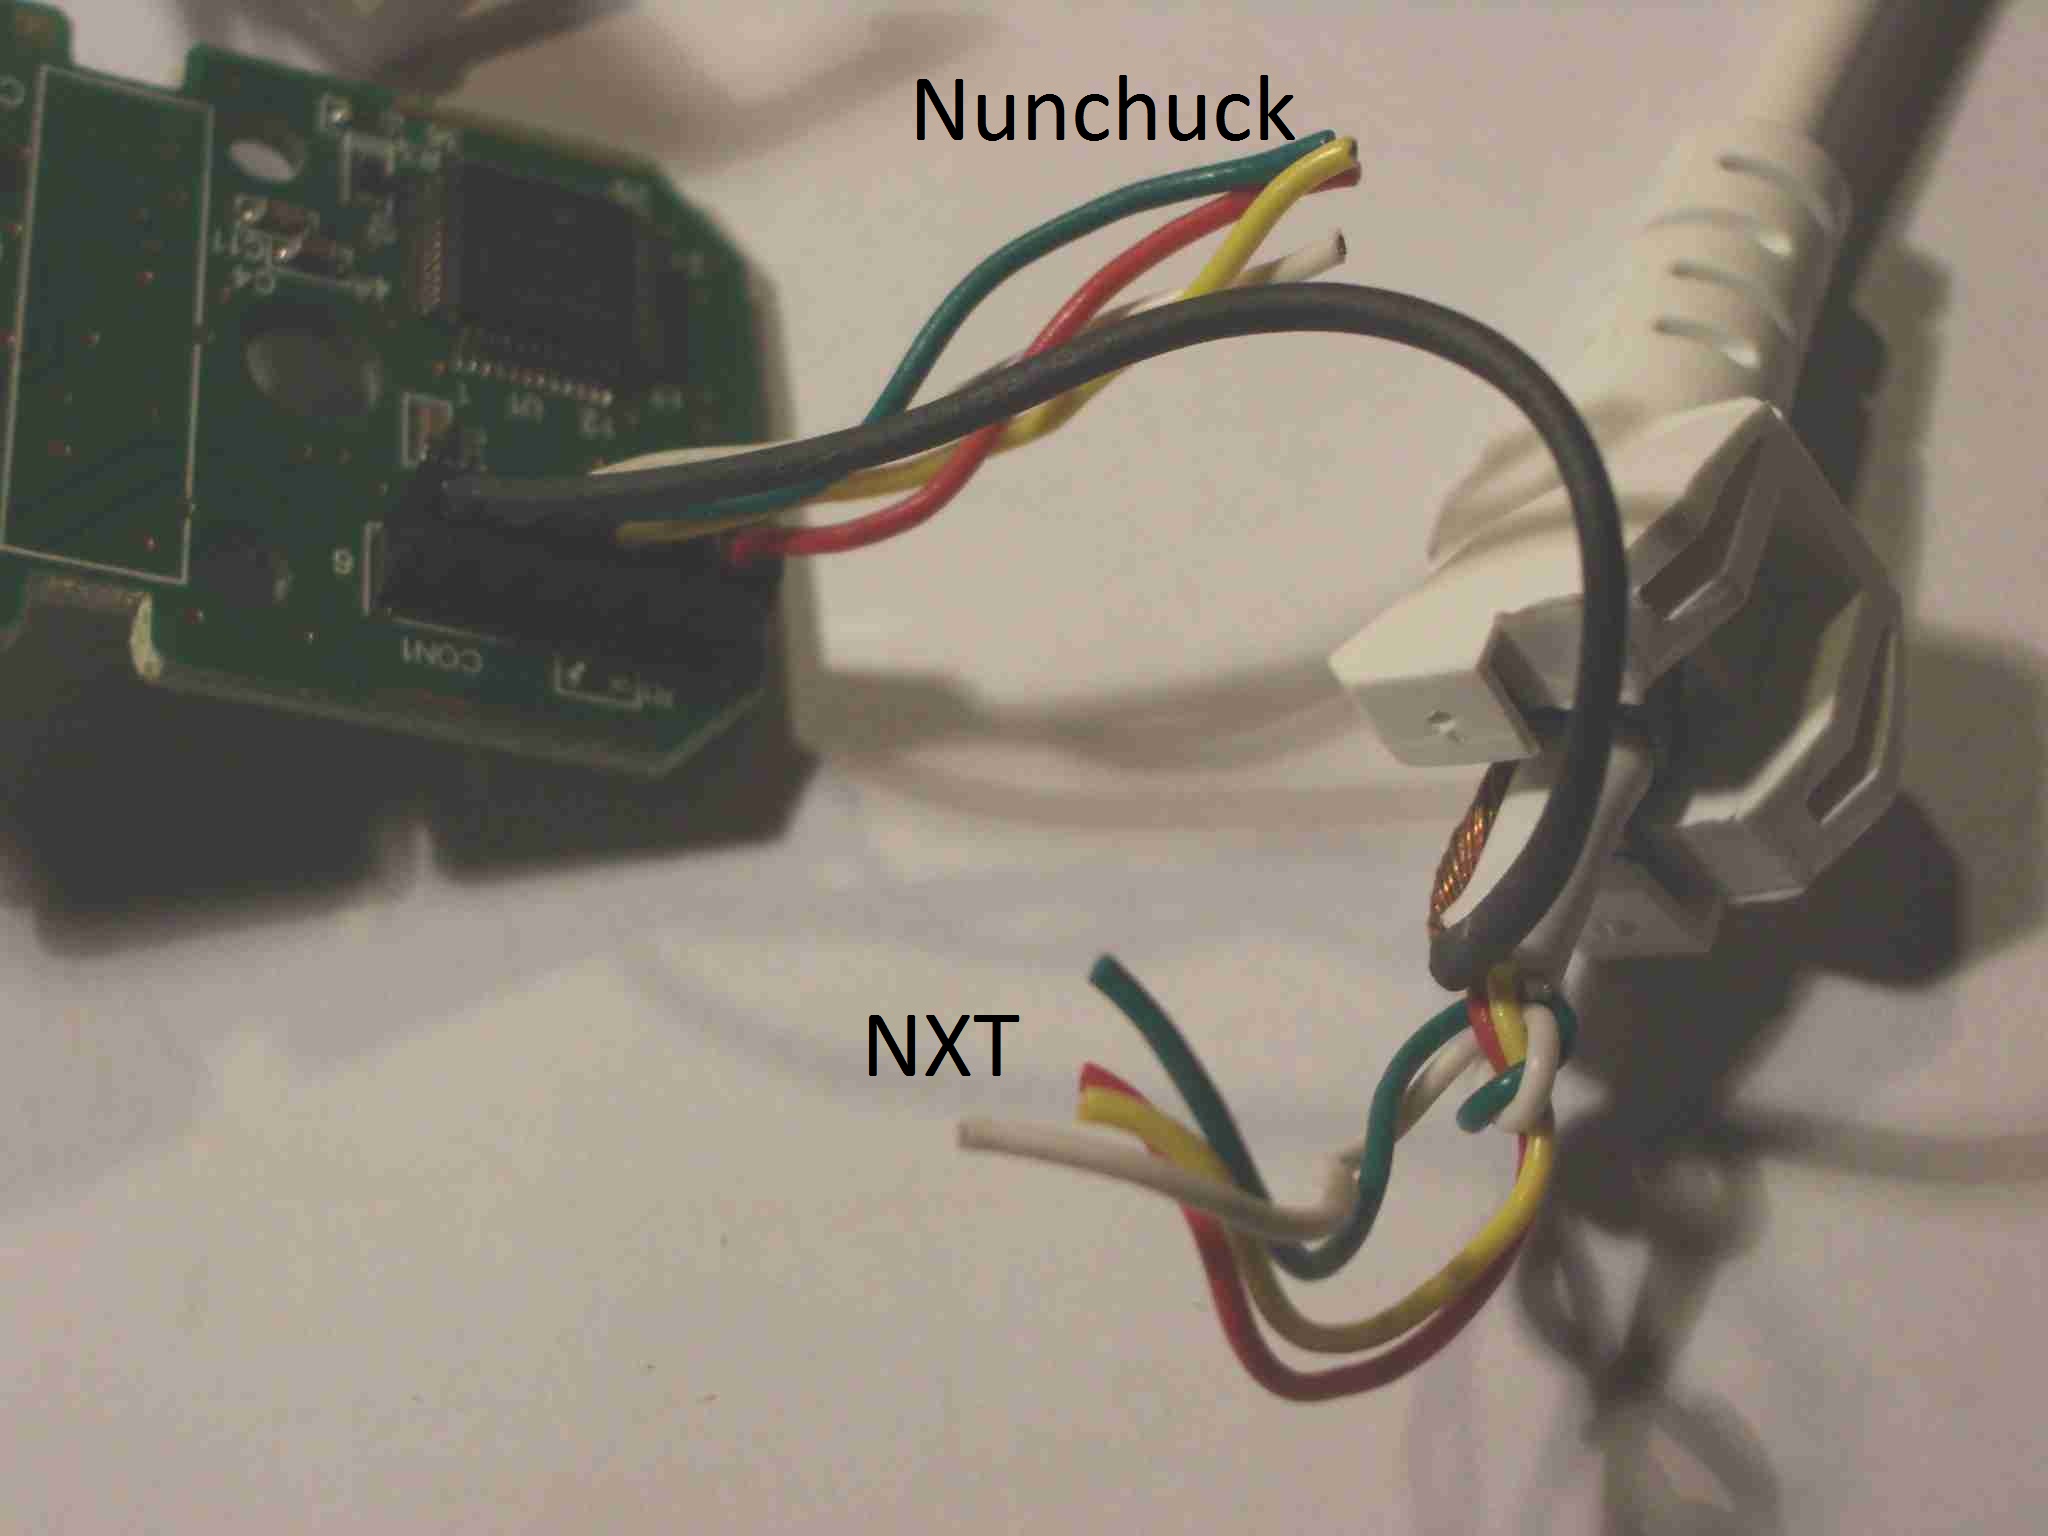 Conectar nunchuck a LEGO Mindstorms NXT 9